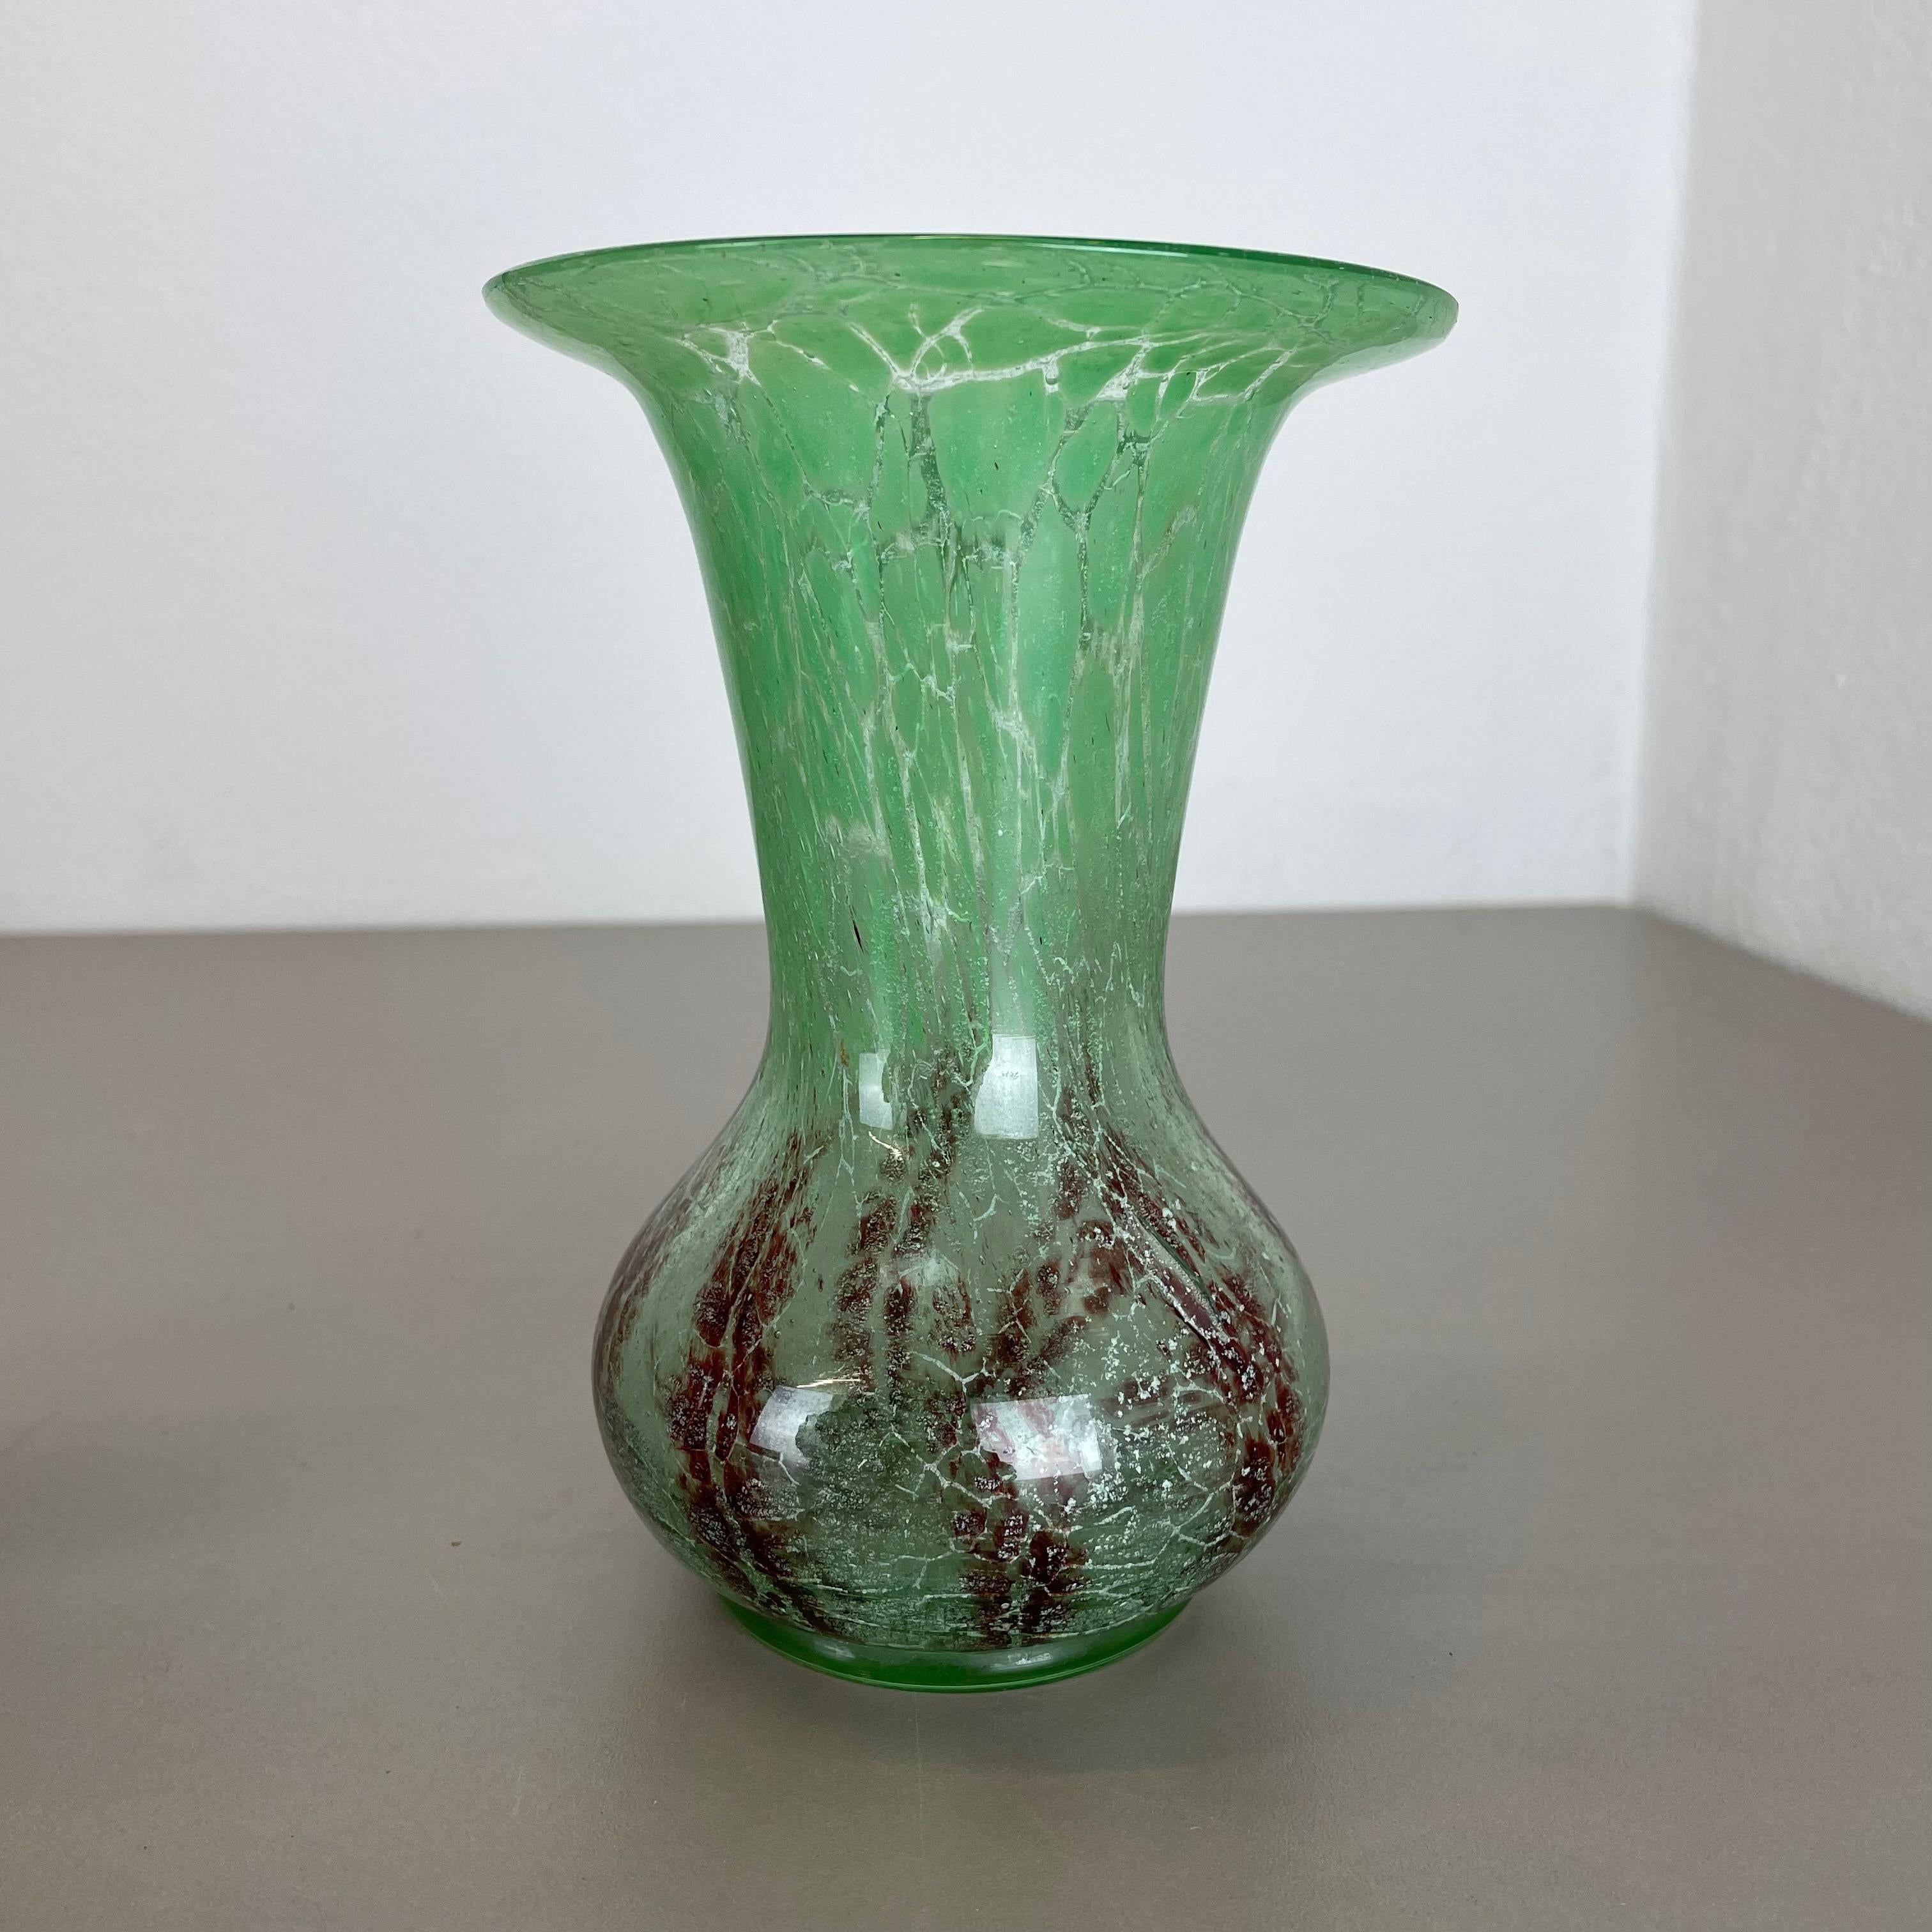 Set of 2 Ikora Glass Vases by Karl Wiedmann for WMF Germany, 1930s Bauhaus For Sale 6